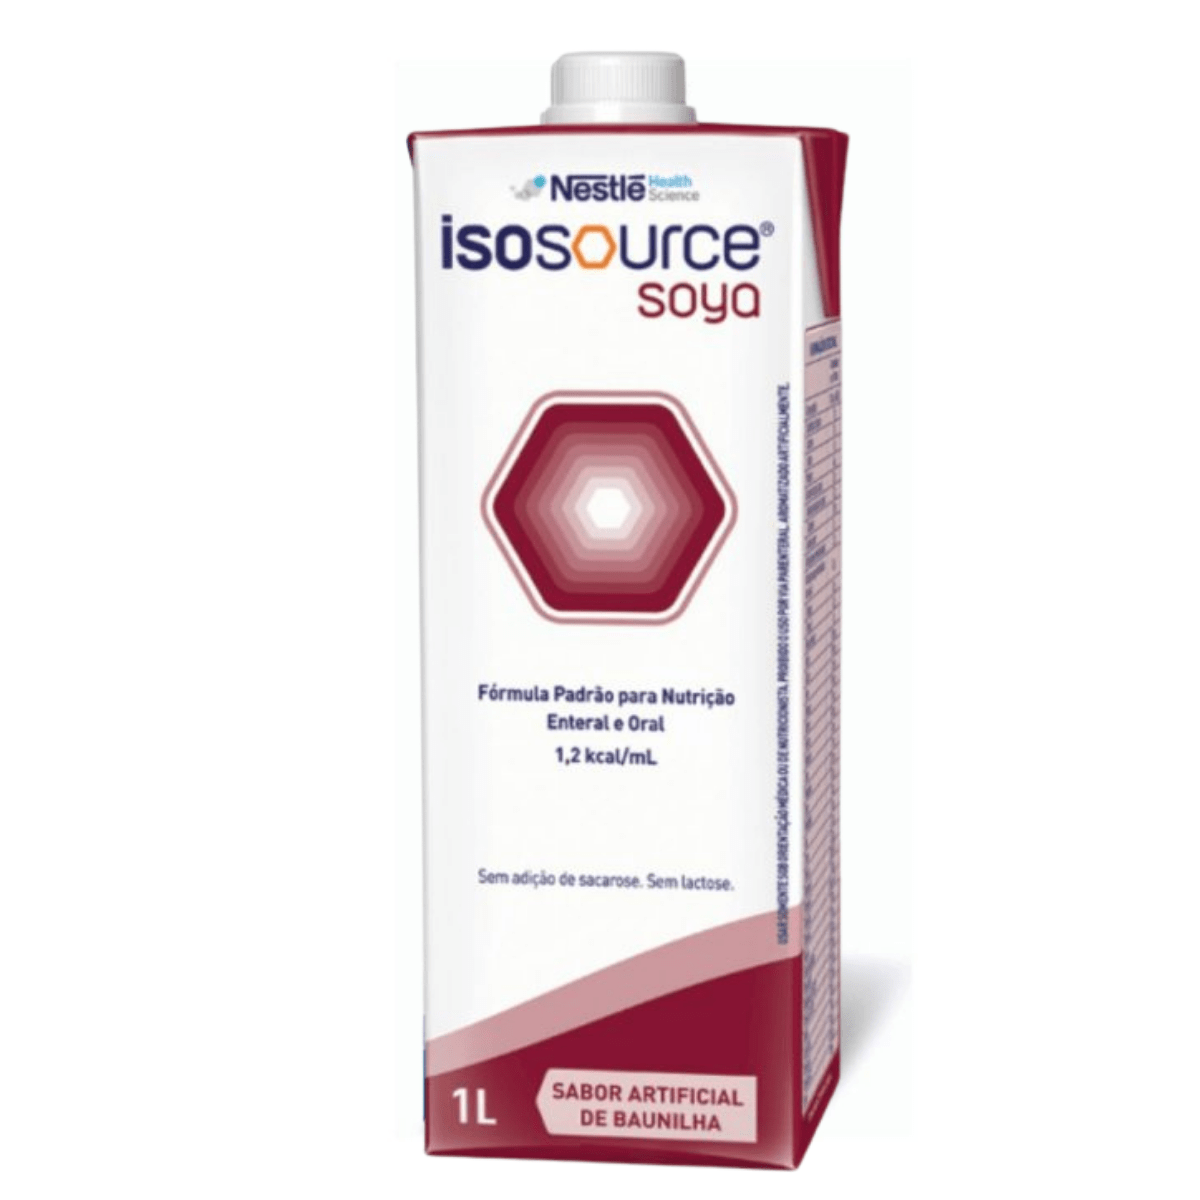 Isosource Soya 1.2 Kcal - 1000 ml - Nestlé